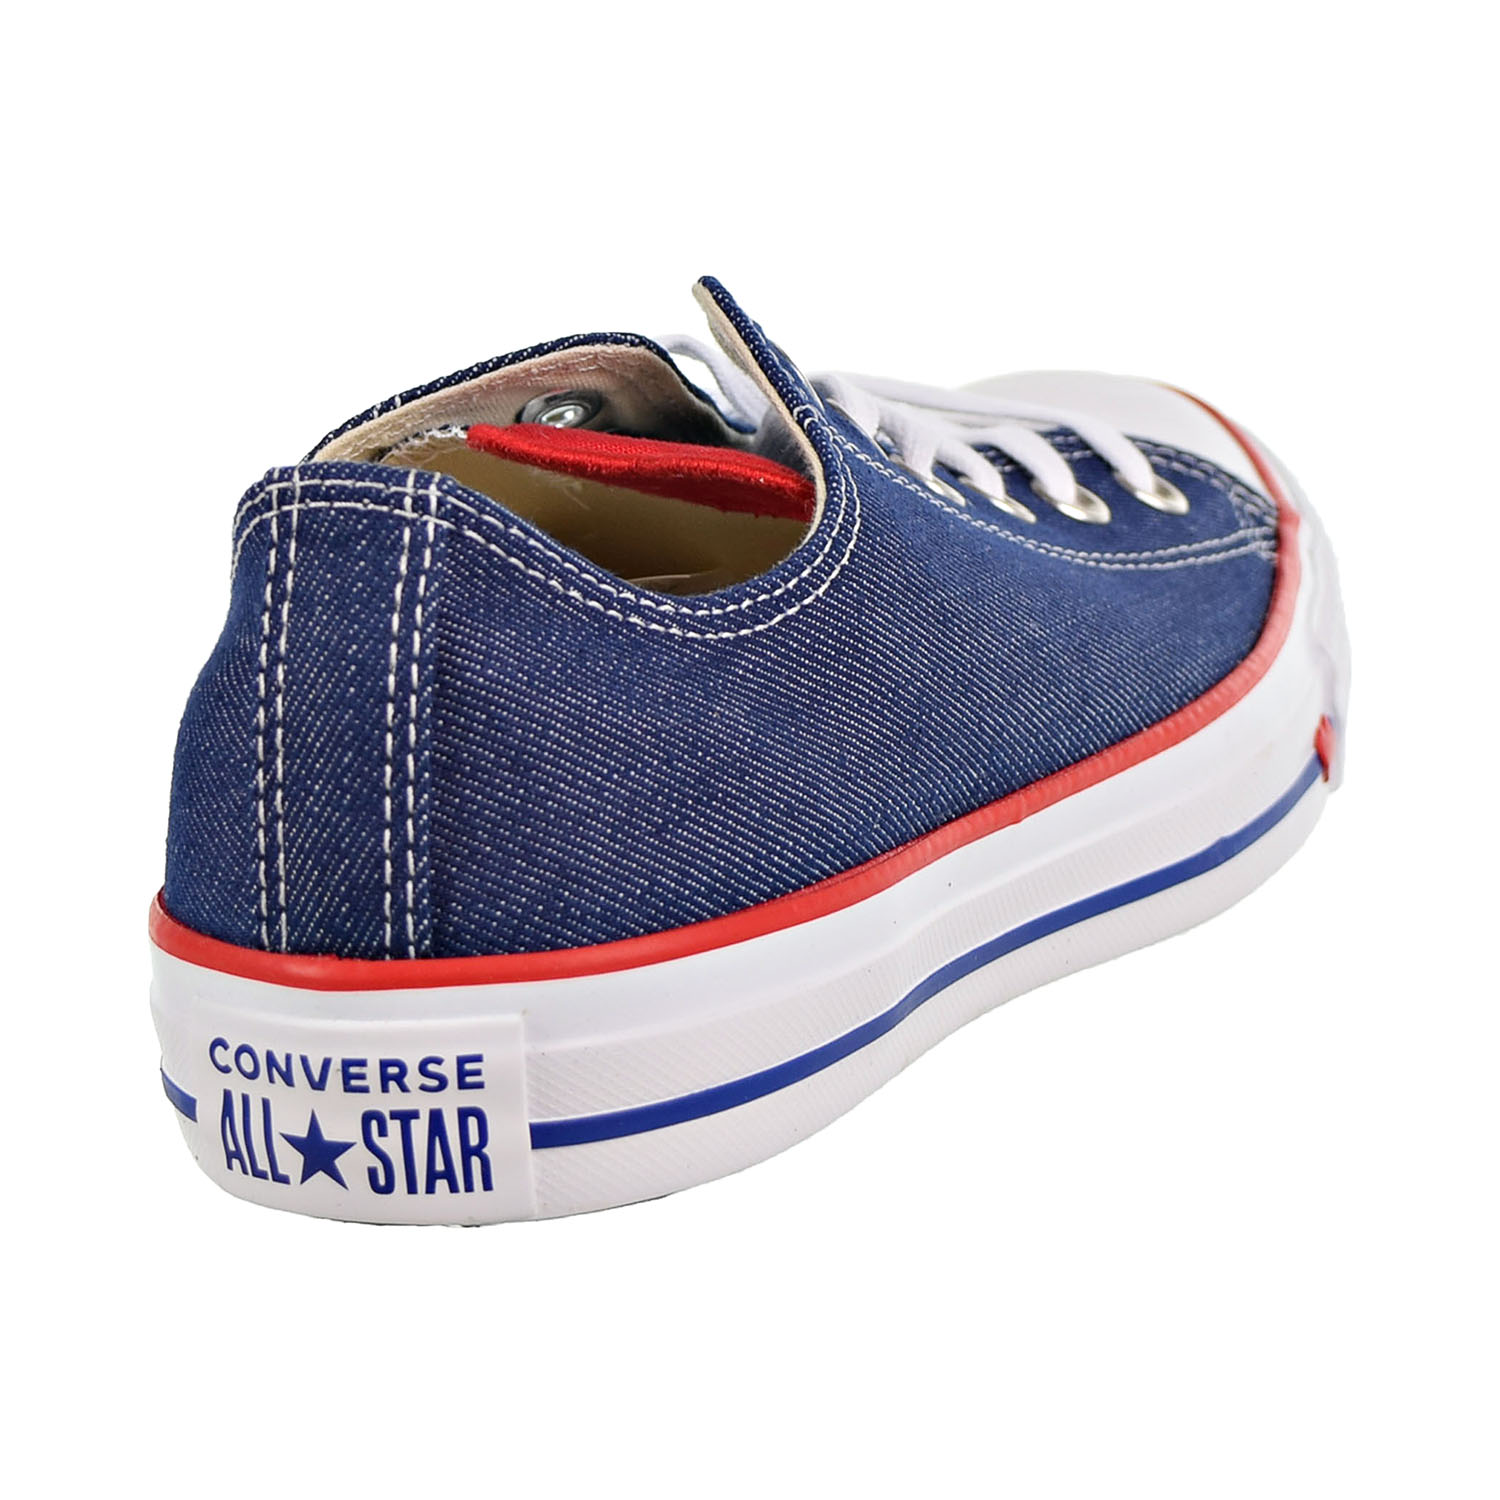 Converse Chuck Taylor All Star Ox Big Kids/Men's Shoes Indigo/Enamel Red/White  163308f (13